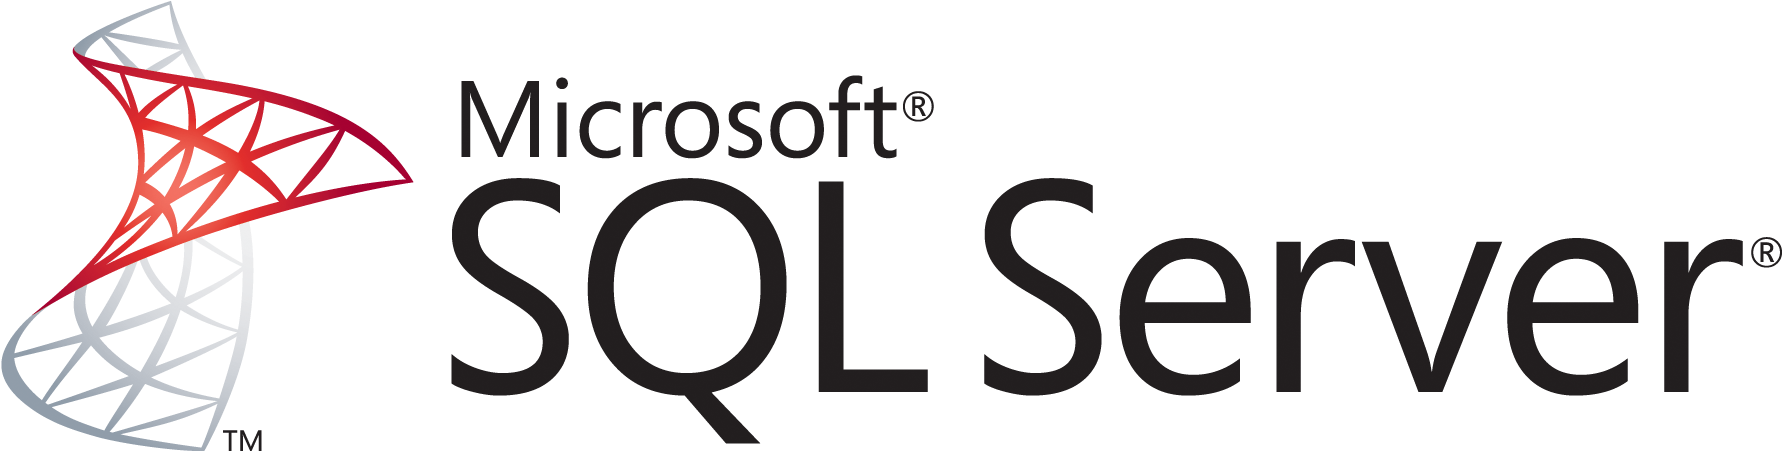 Microsoft Logo Transparent Background - Microsoft Sql Server Logo (1807x450)